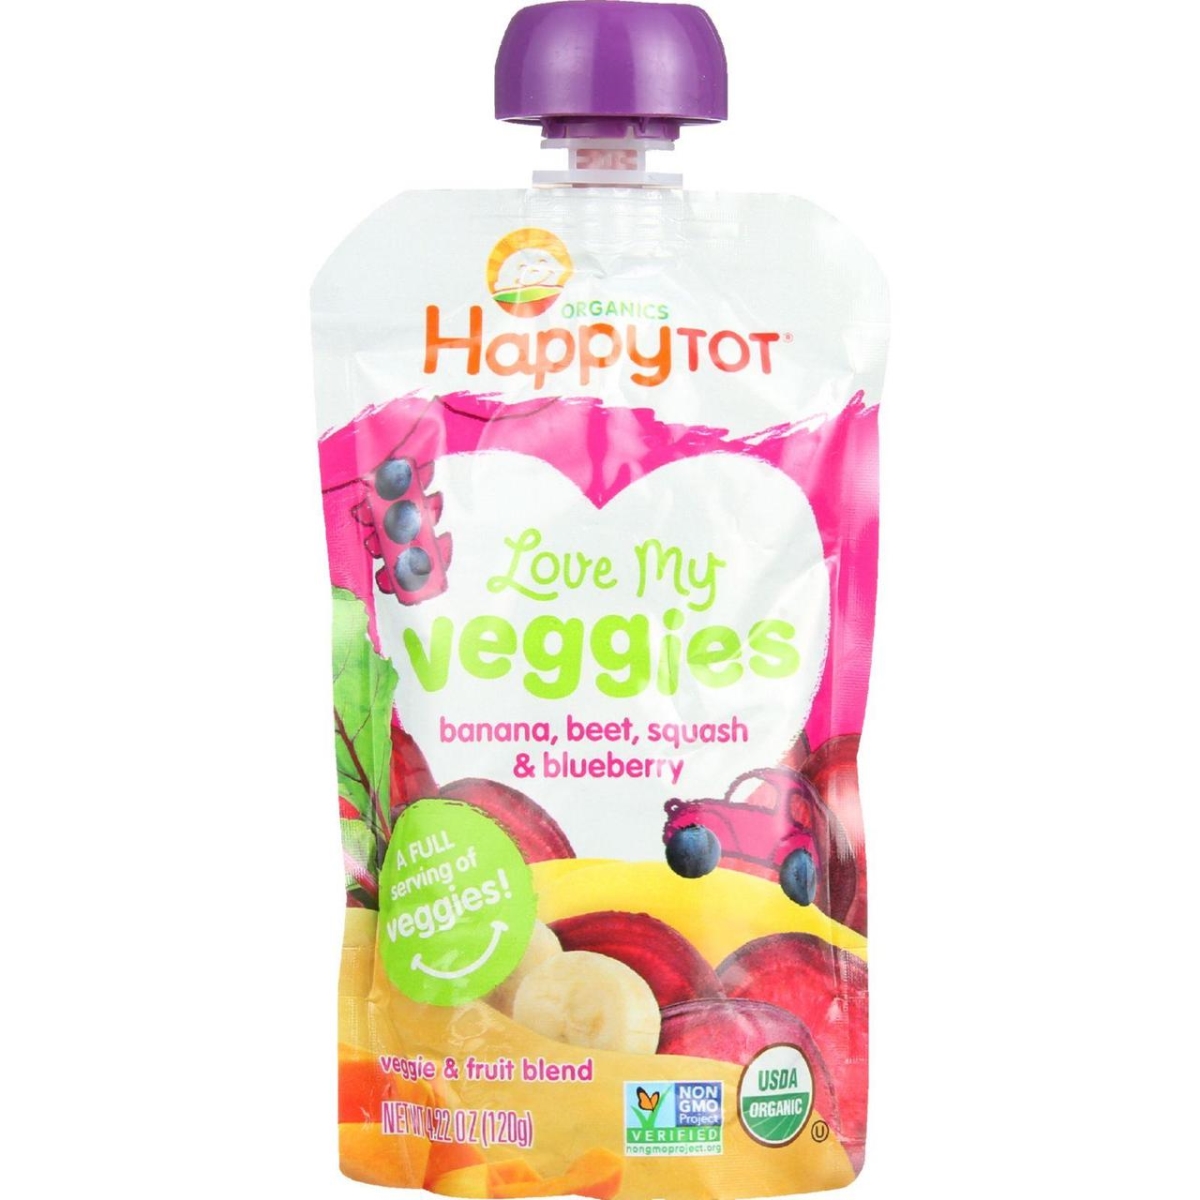 Happy Tot HG1748540 4.22 oz Organic Love My Veggies - Banana Beet Squash & Blueberry Toddler Food - Case of 16